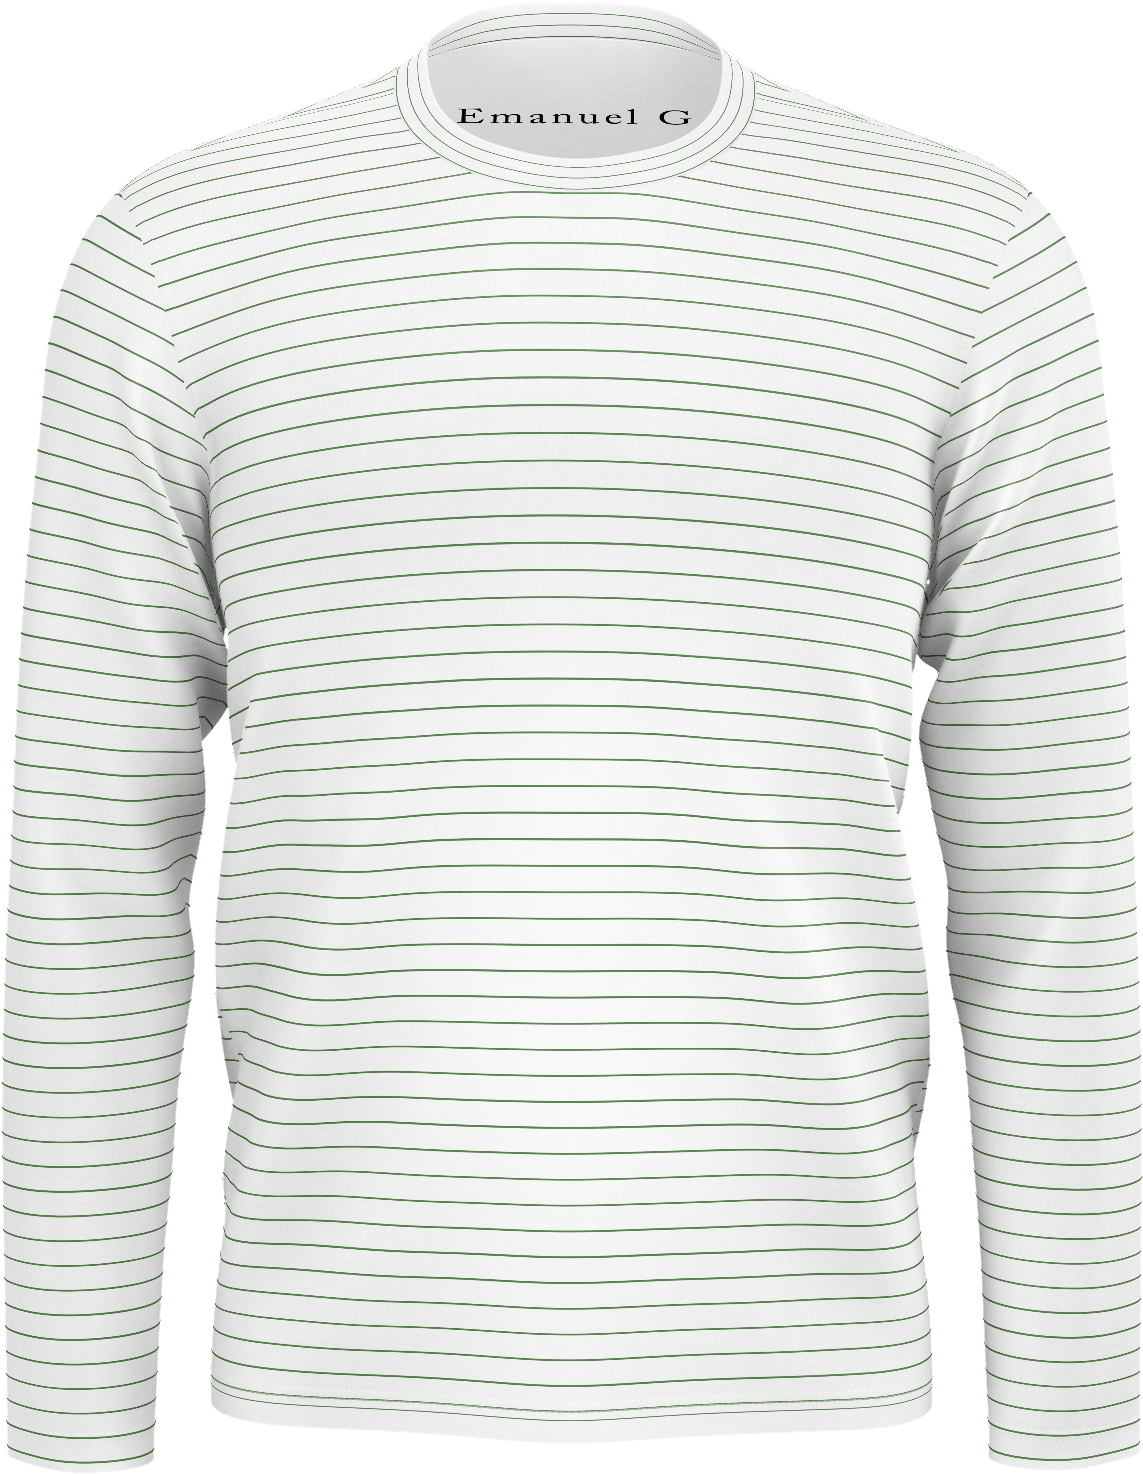 Striped Long Sleeve Shirt Mockup PNG image